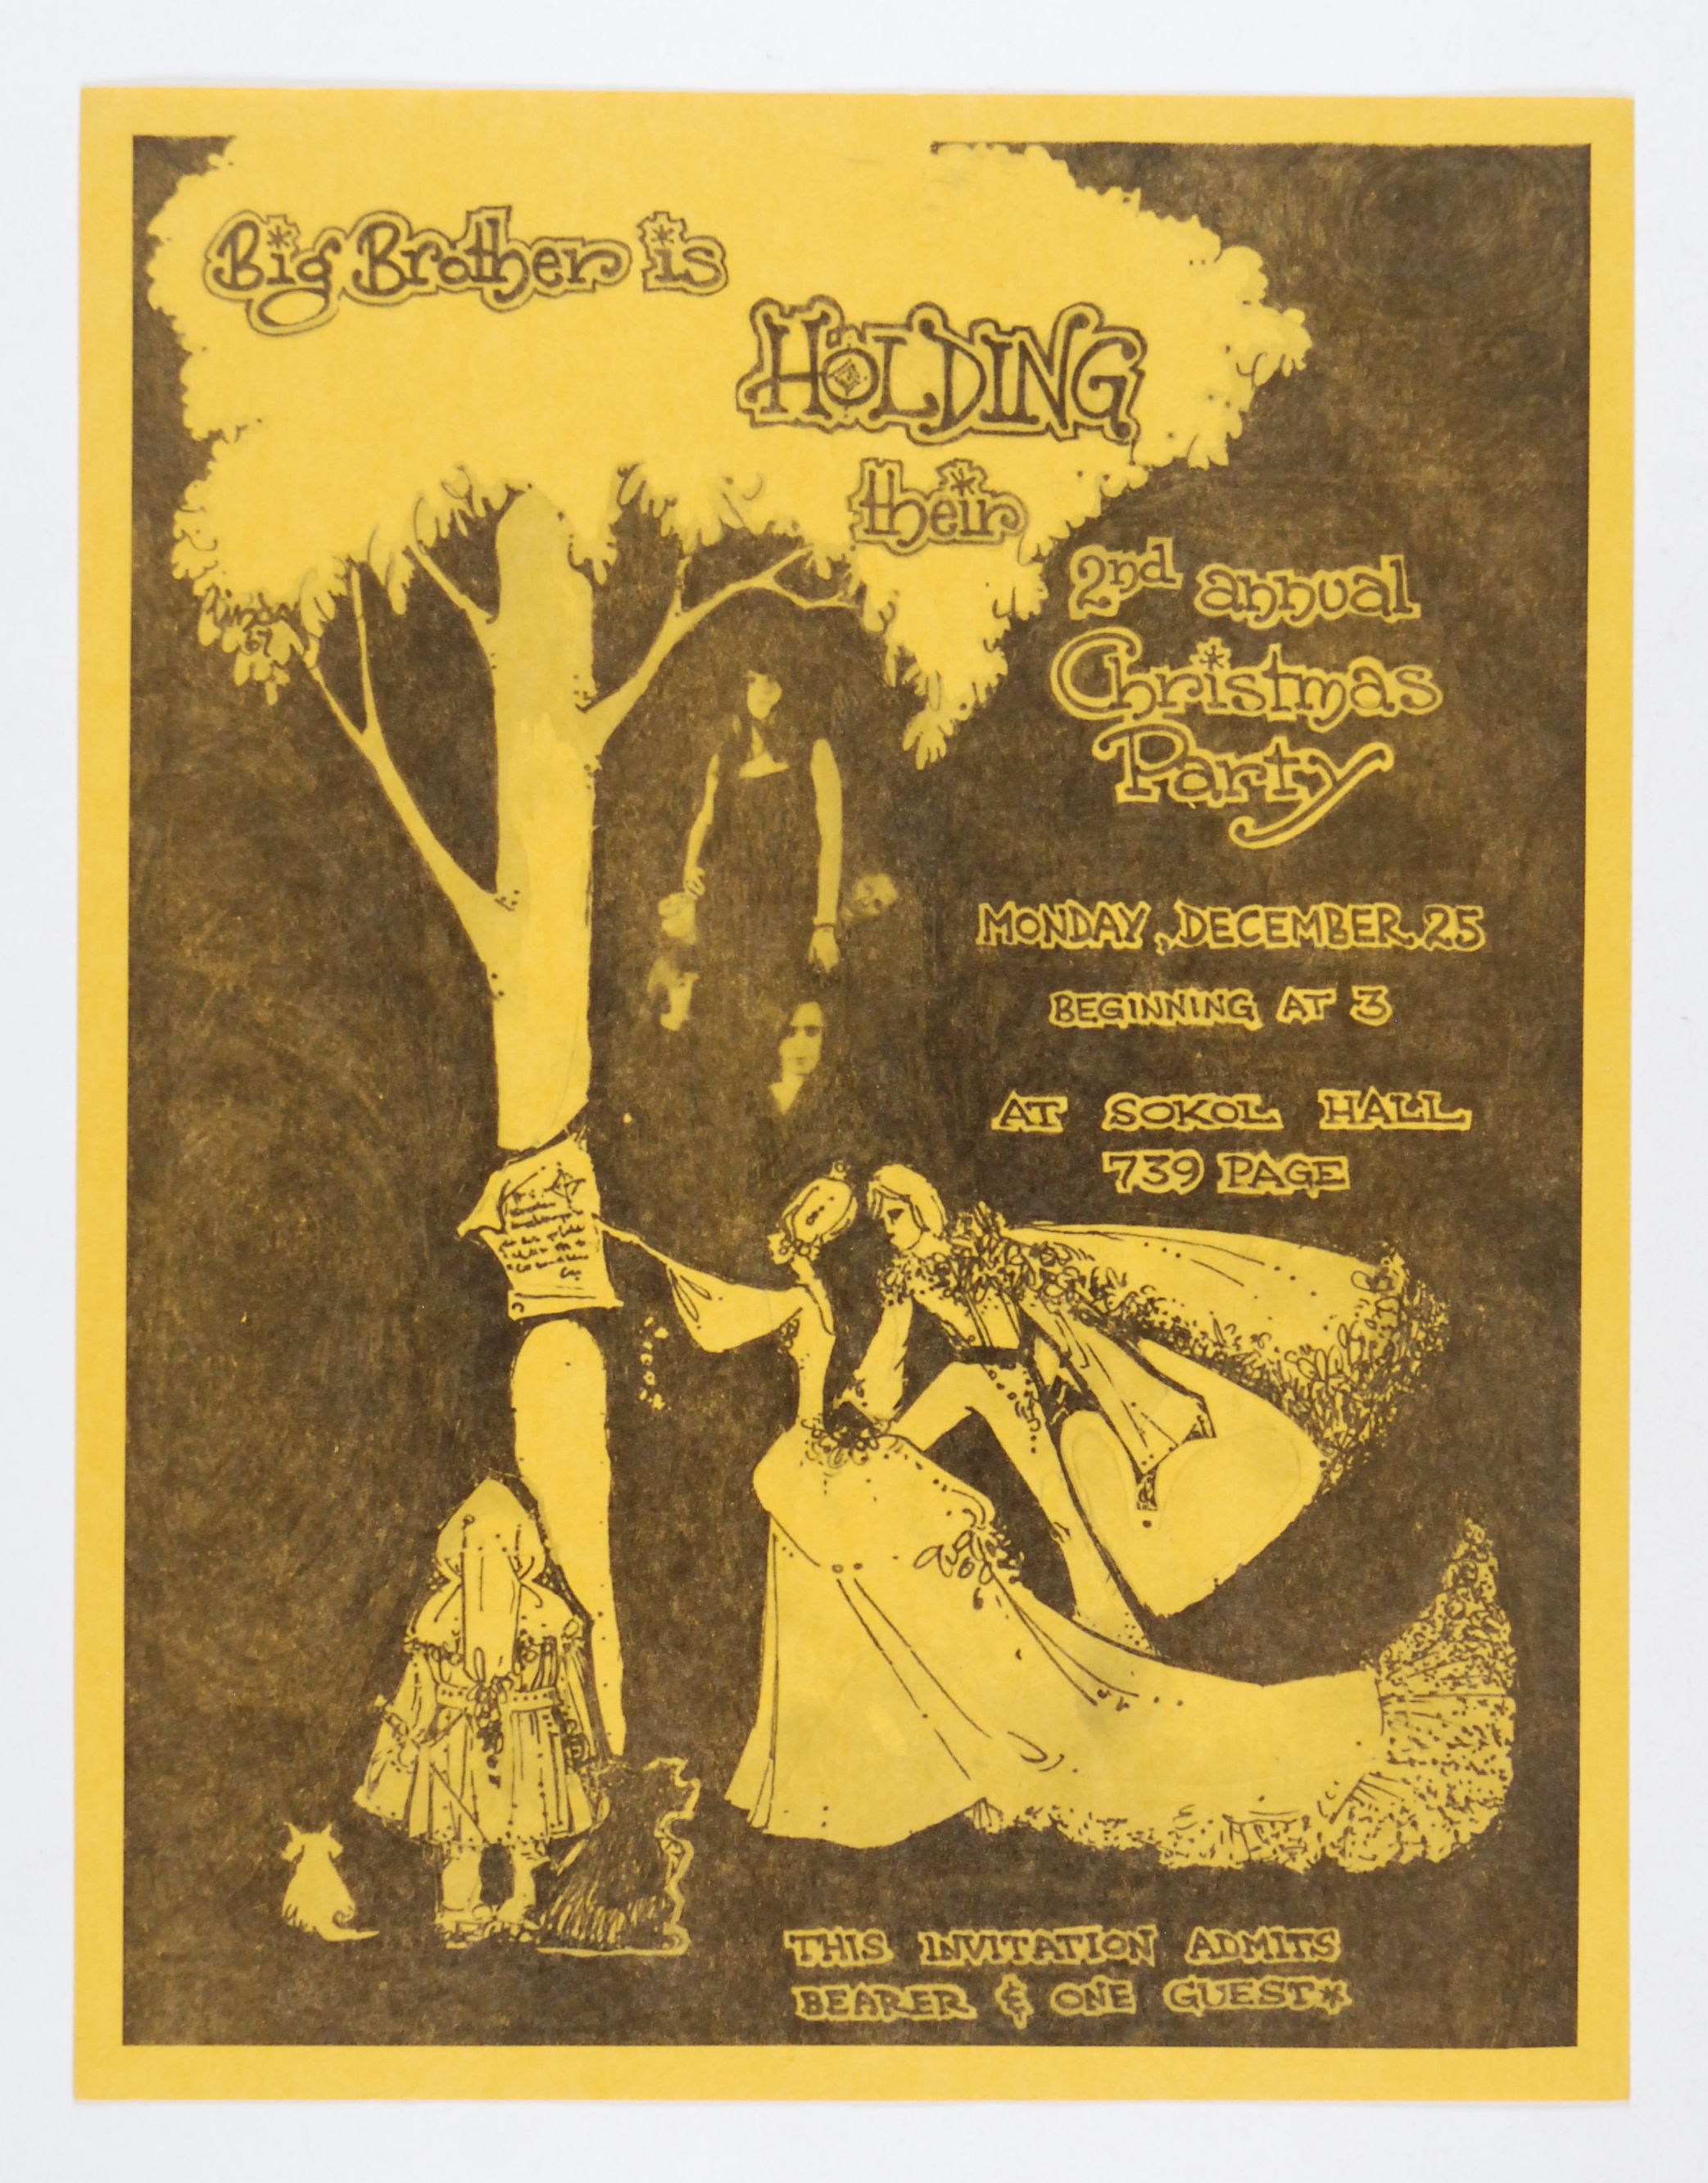 Sokol Hall Christmas Party 1967 Concert Poster